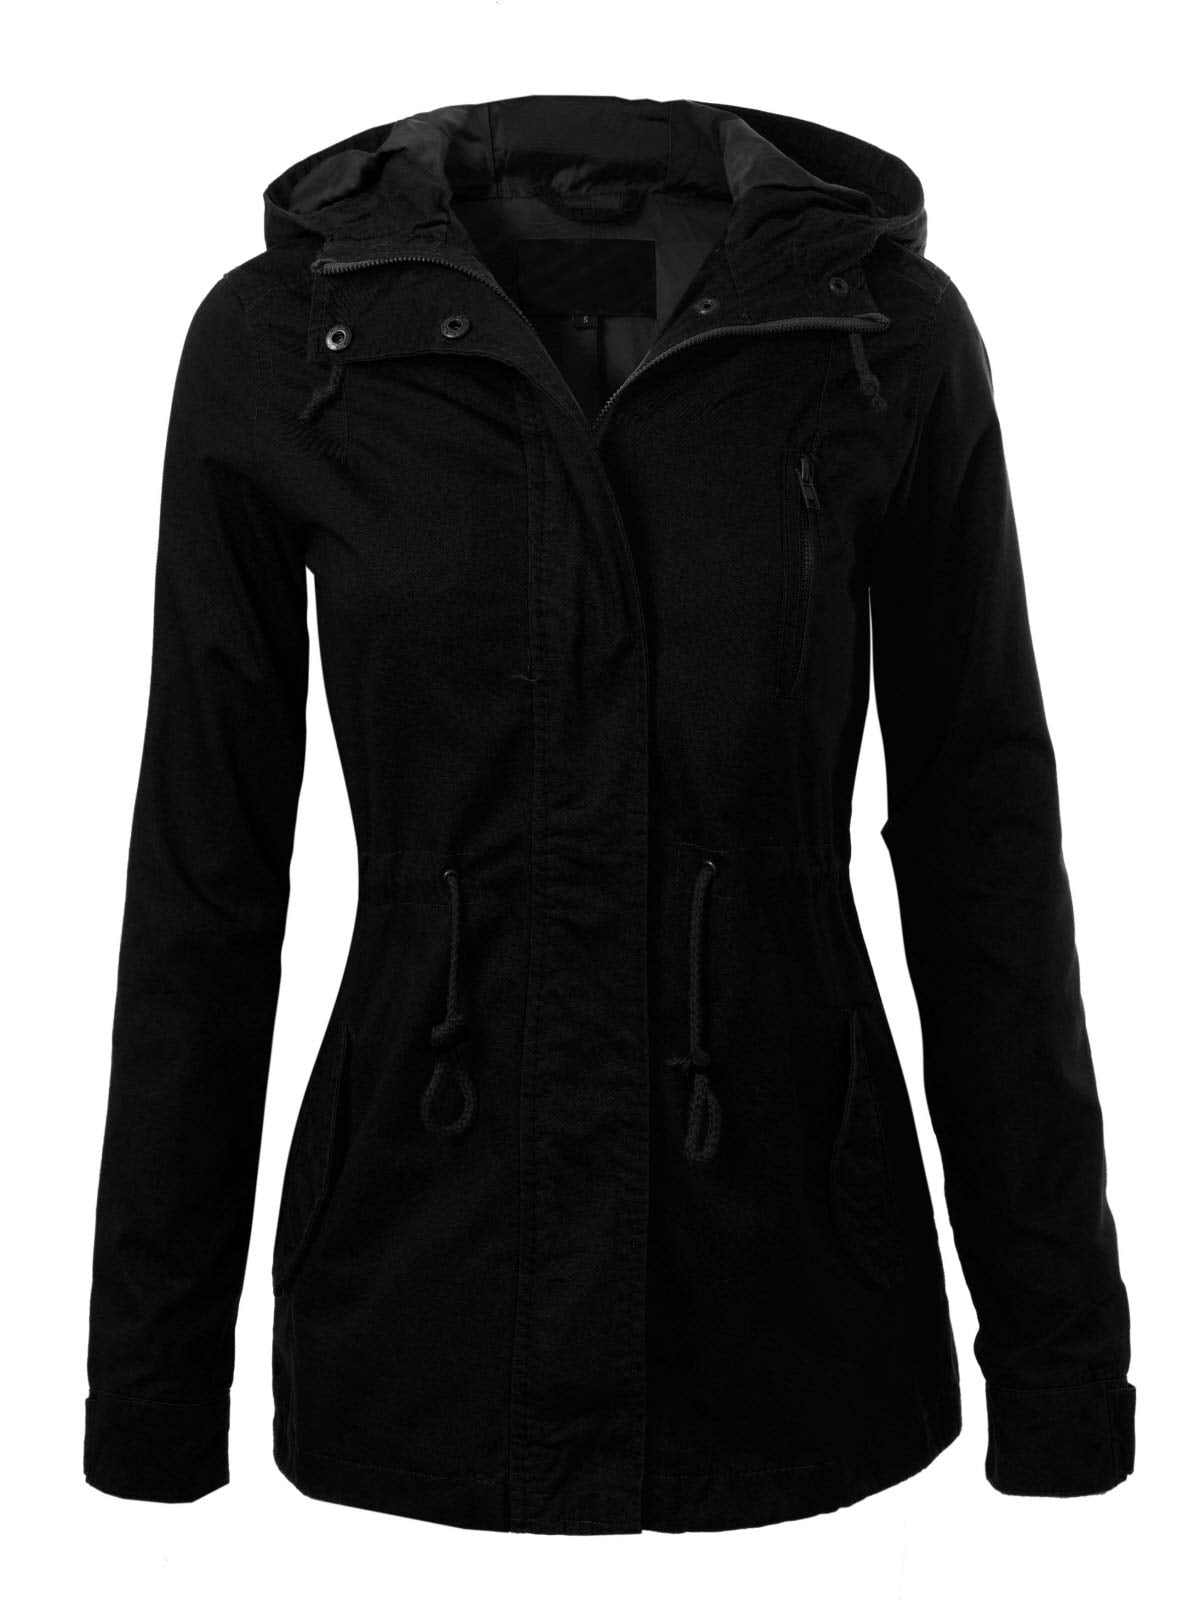 Ambiance Outerwear Coats & Jackets - Women's Jacket Medium Military ...